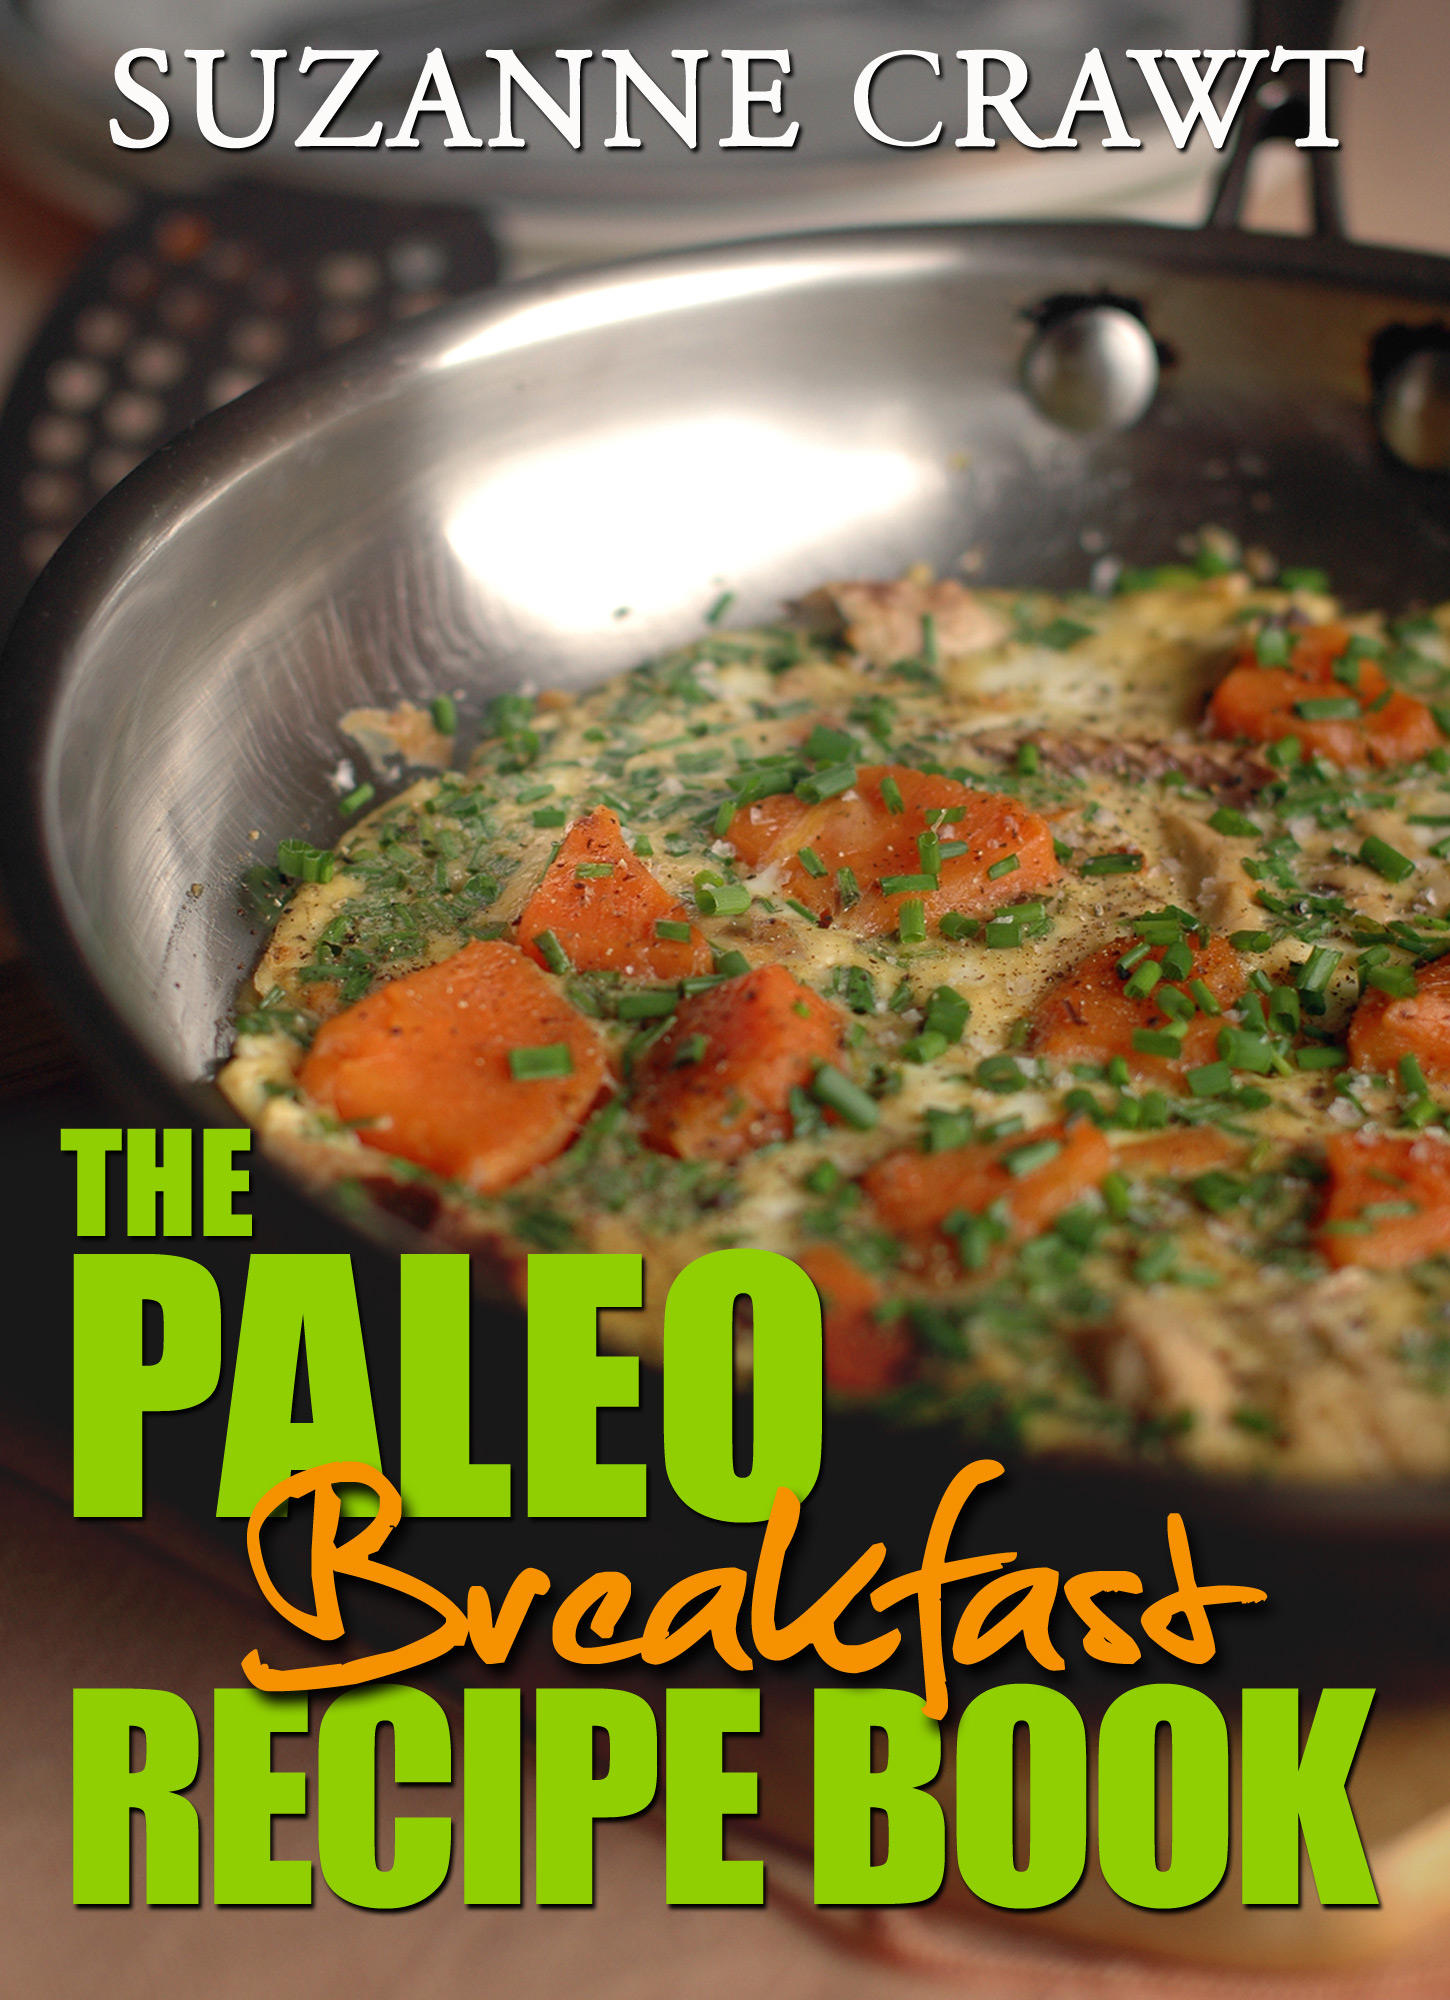 Paleo Breakfast Recipe Book - The Paleo Network